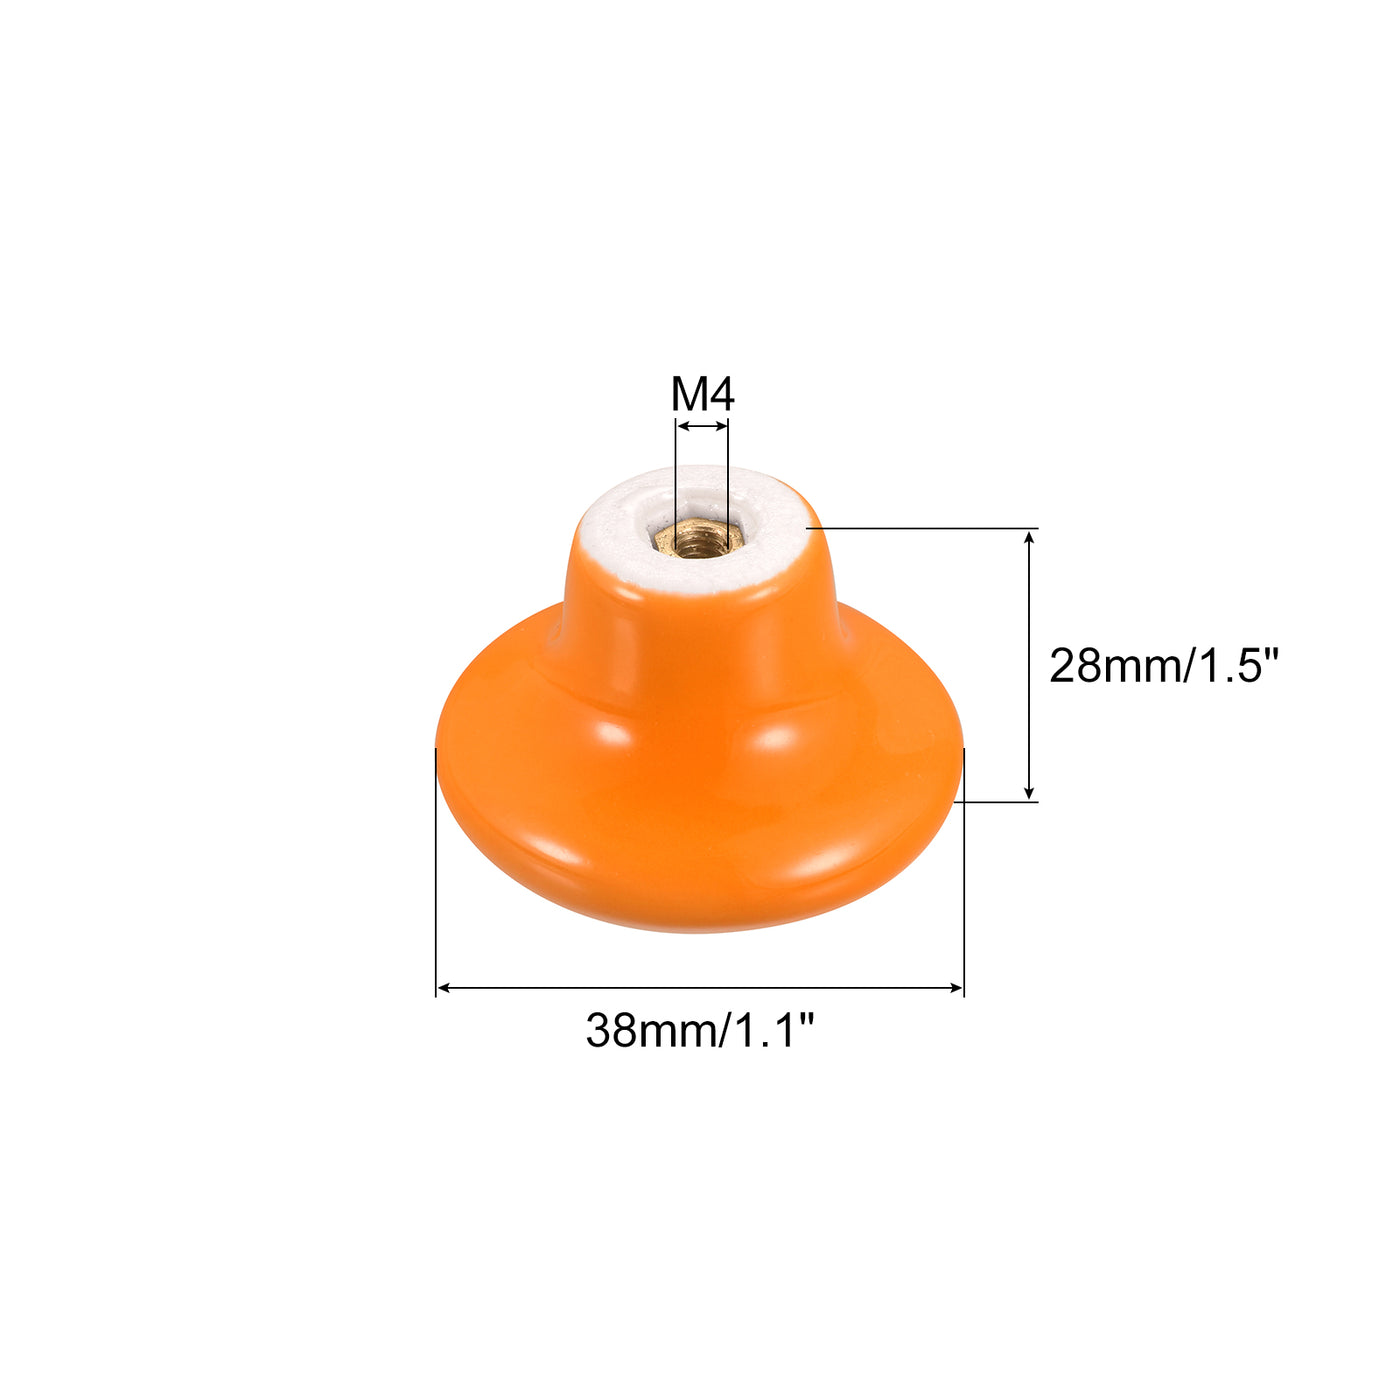 uxcell Uxcell Ceramic Drawer Knobs 6pcs Mushroom Shape Pulls 1.1"x1.5" for Dresser(Orange)